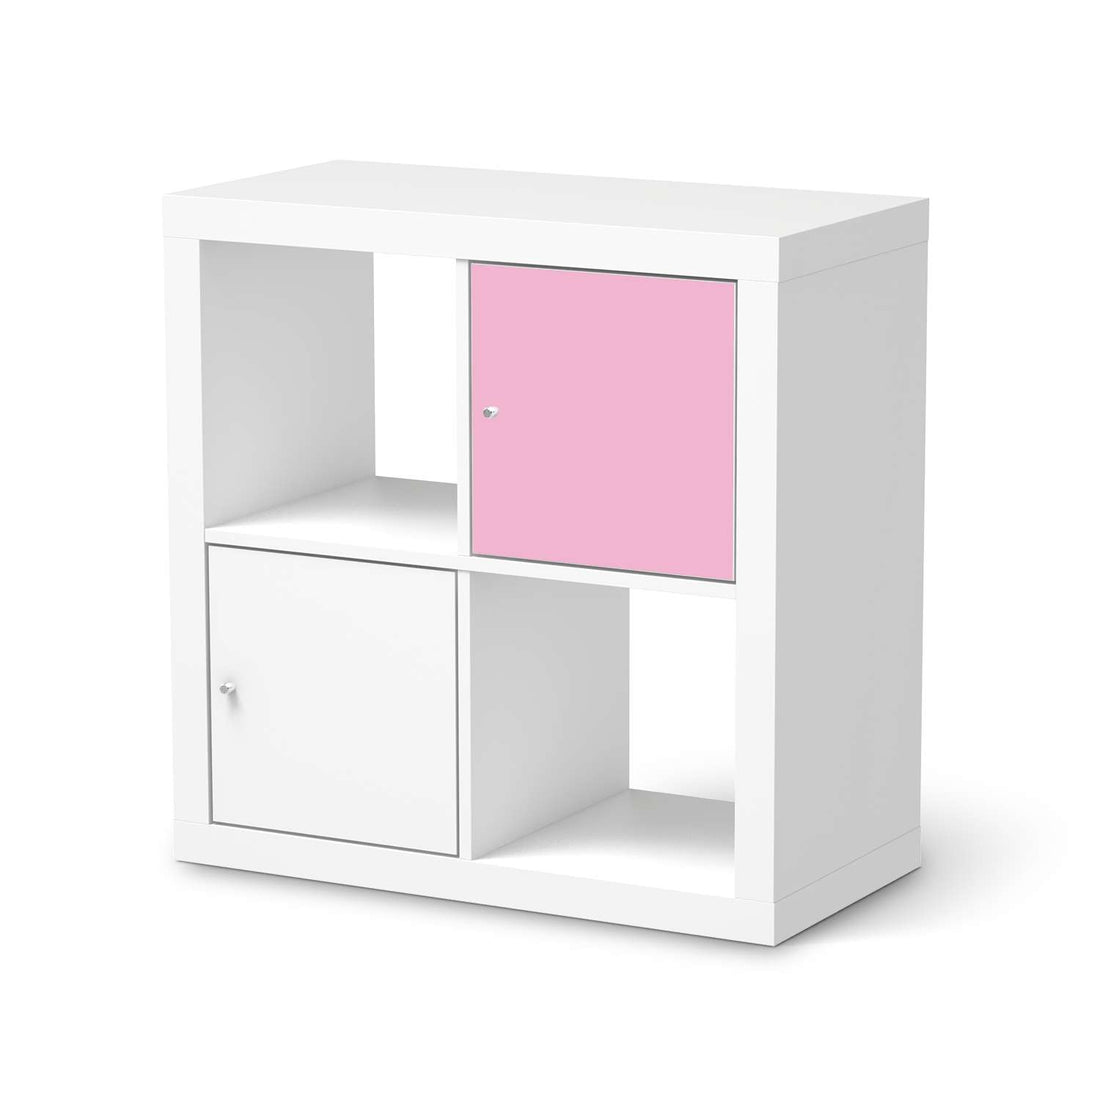 Selbstklebende Folie Pink Light - IKEA Kallax Regal 1 Türe  - weiss